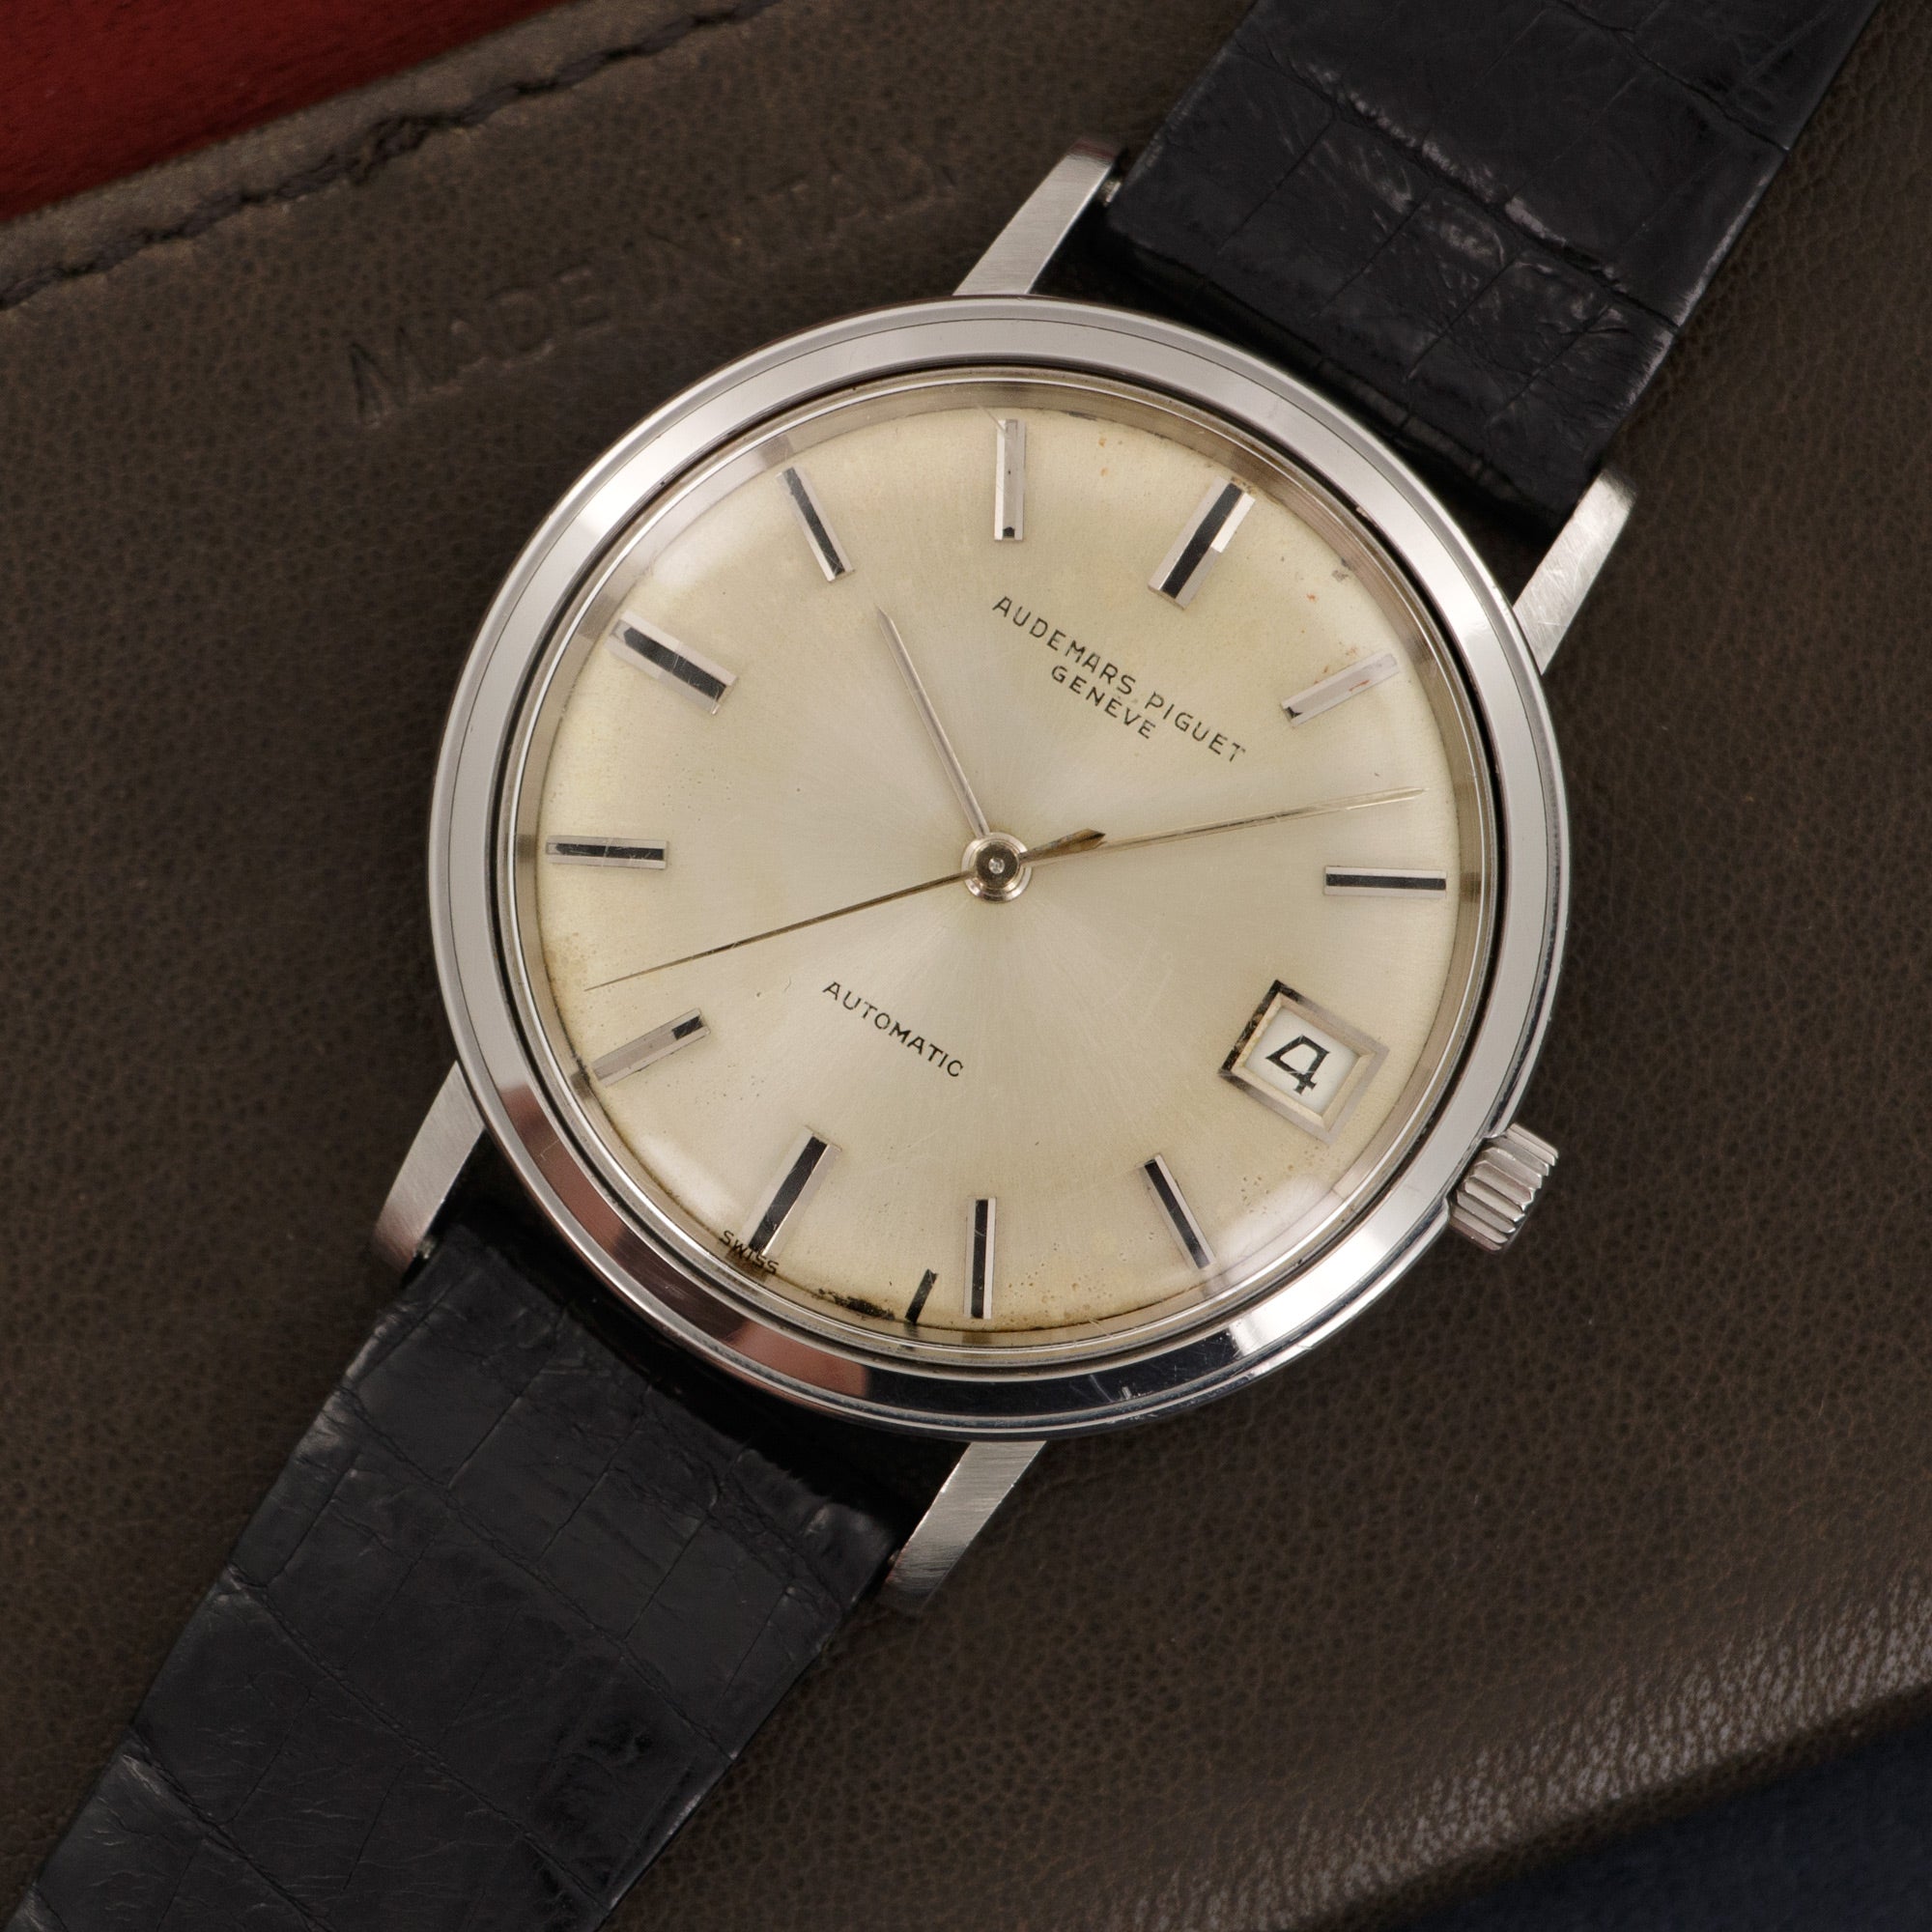 Audemars Piguet - Audemars Piguet Steel Automatic Watch, Ref. 5281 - The Keystone Watches